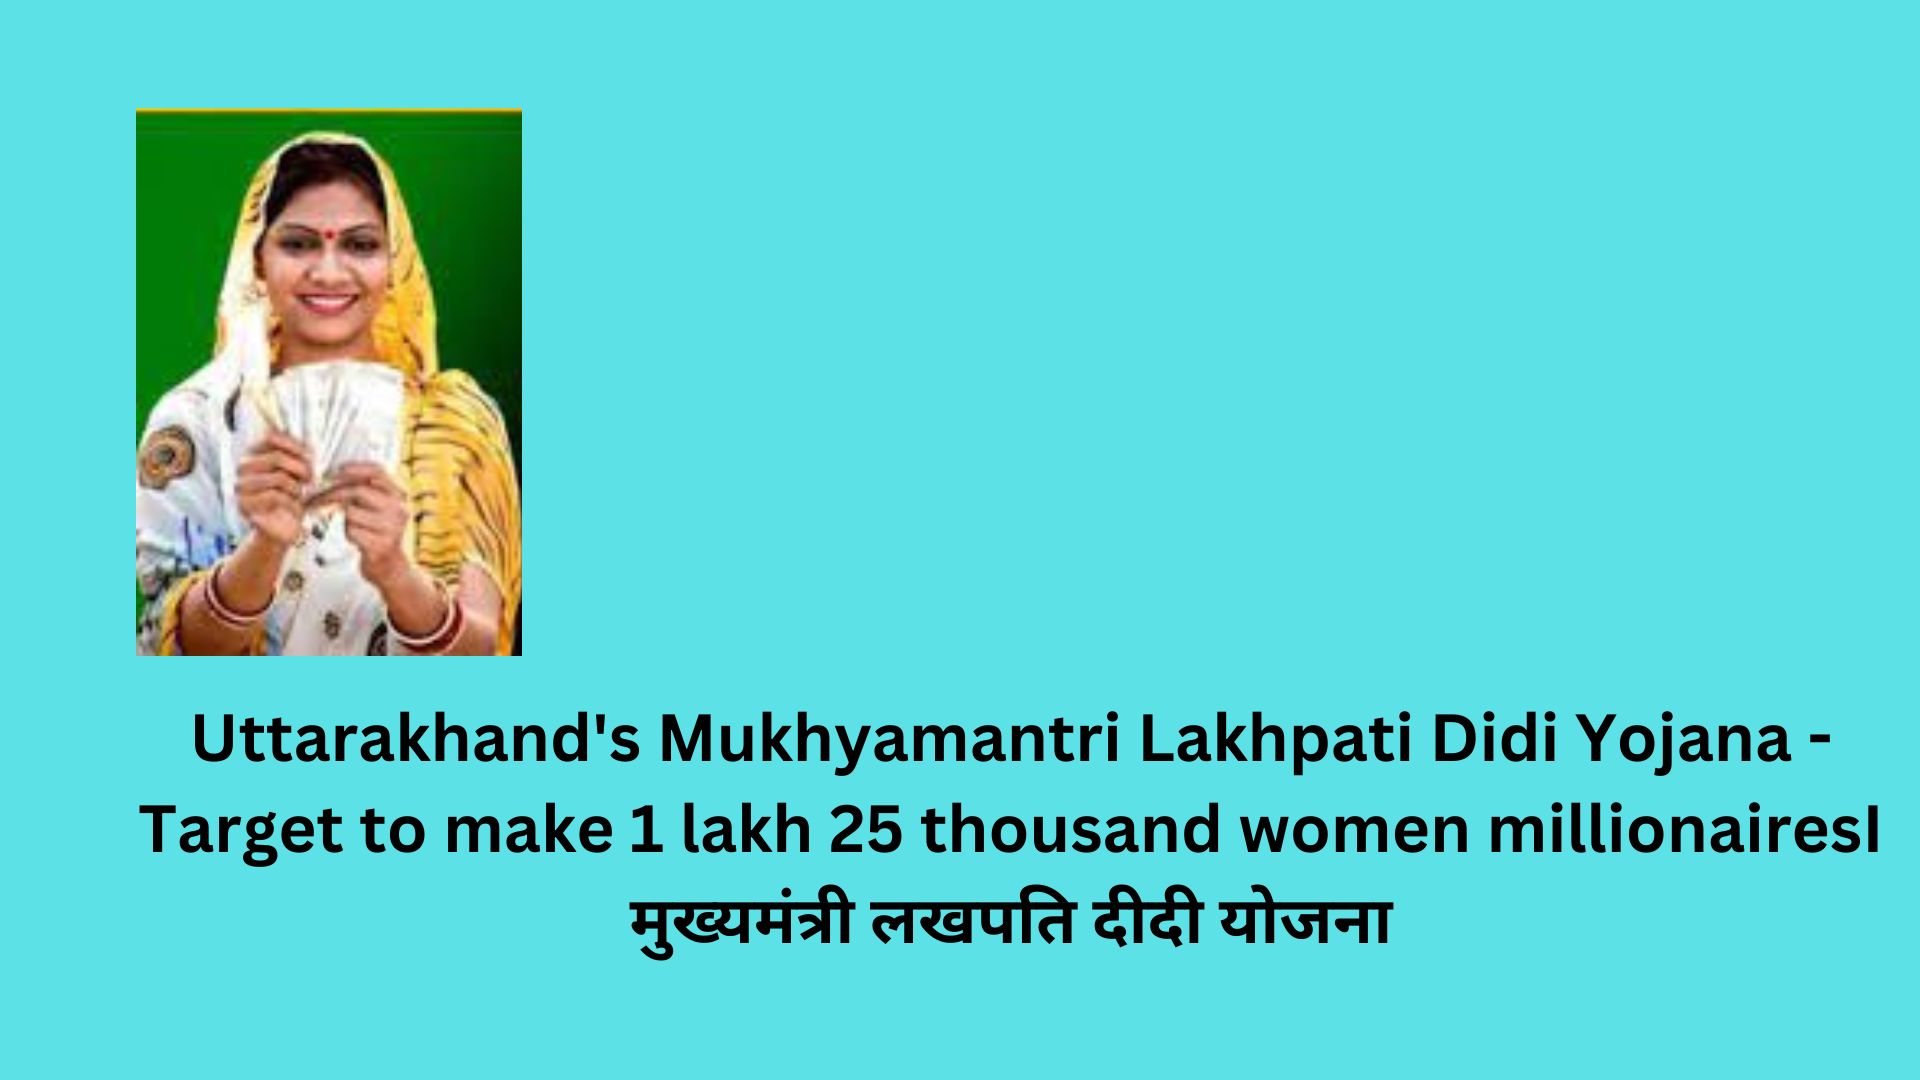 Uttarakhand's Mukhyamantri Lakhpati Didi Yojana - Target to make 1 lakh 25 thousand women millionairesI मुख्यमंत्री लखपति दीदी योजना